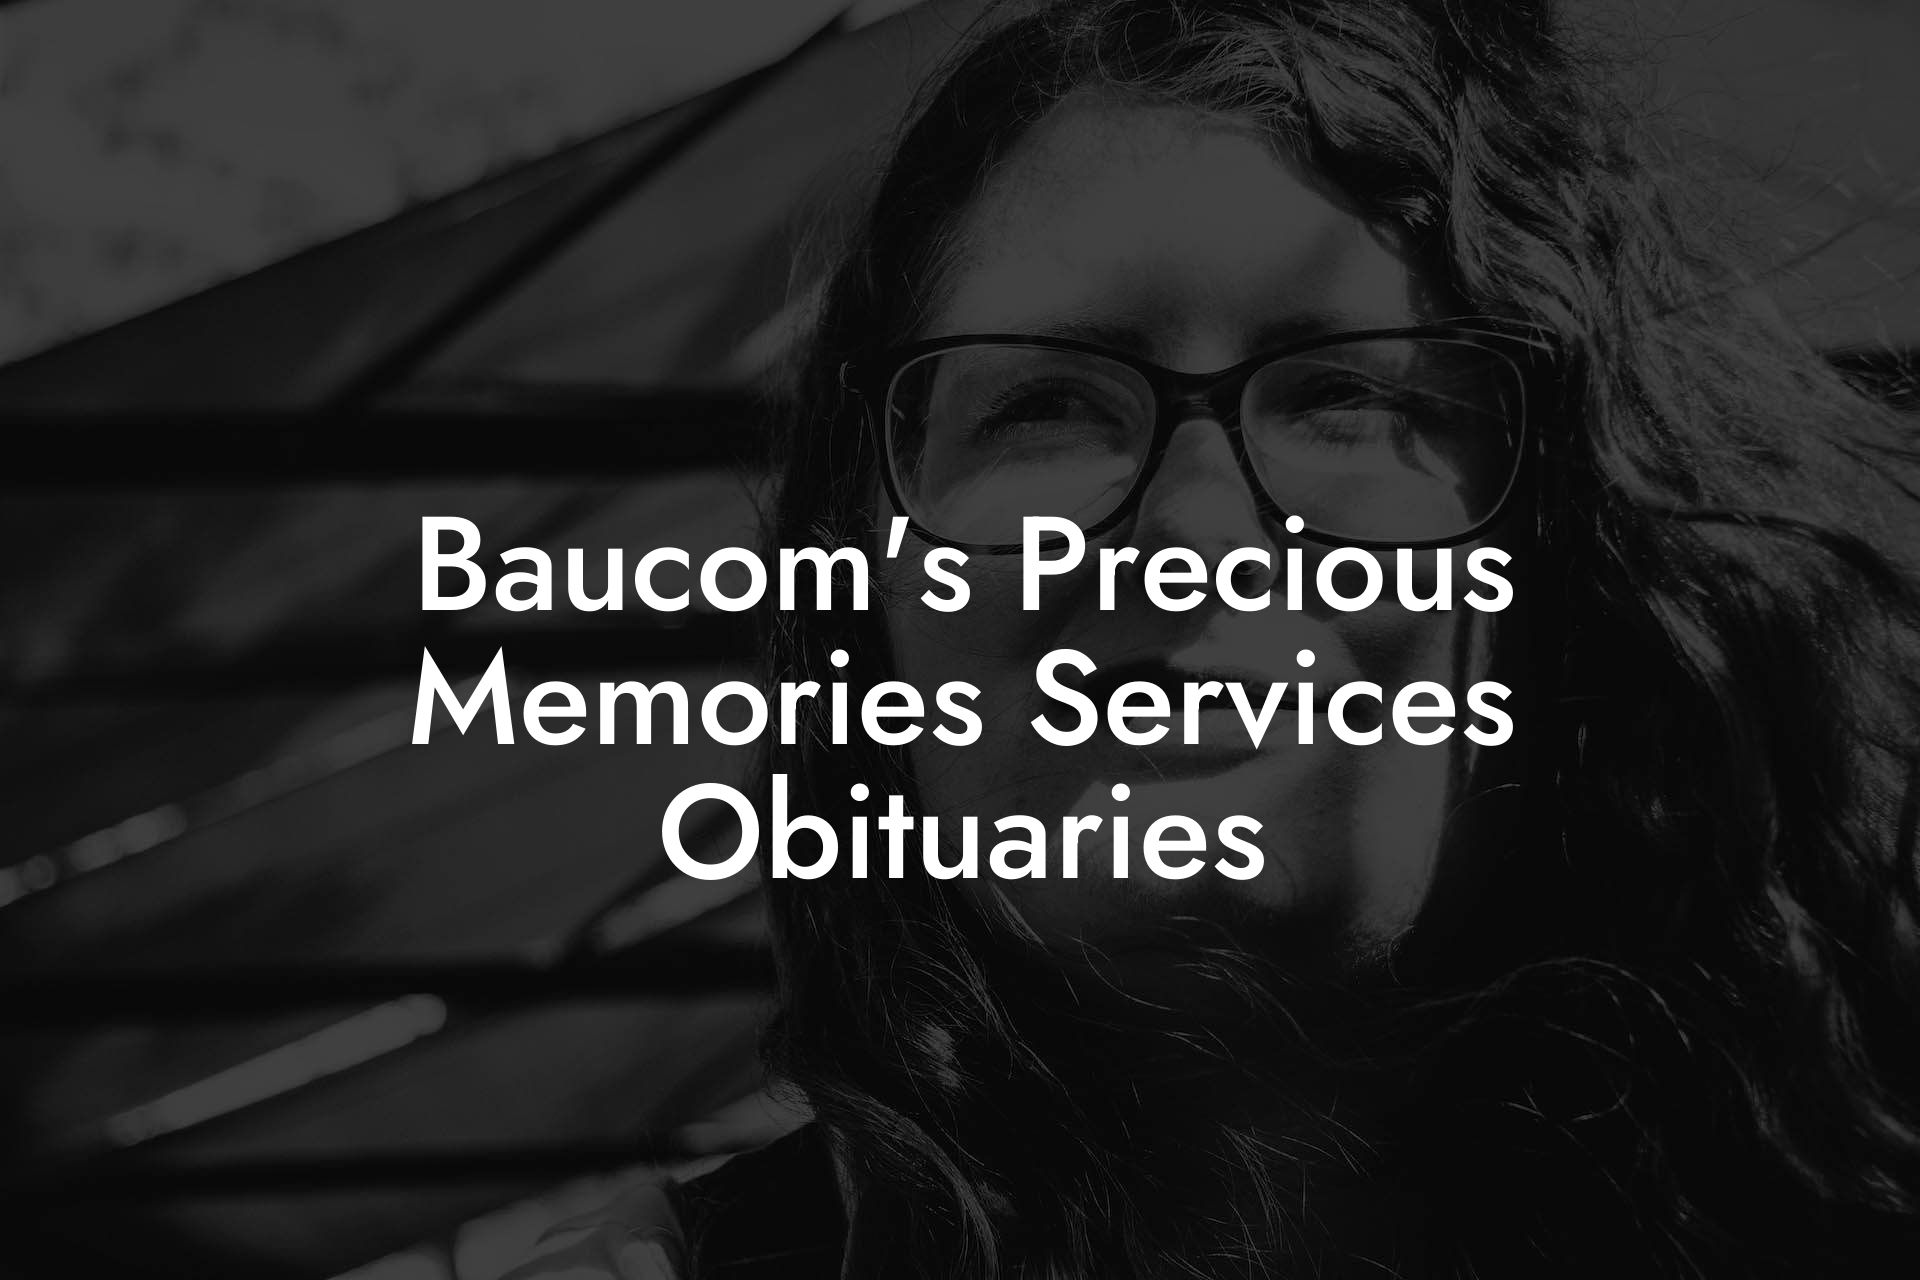 Baucom's Precious Memories Services Obituaries